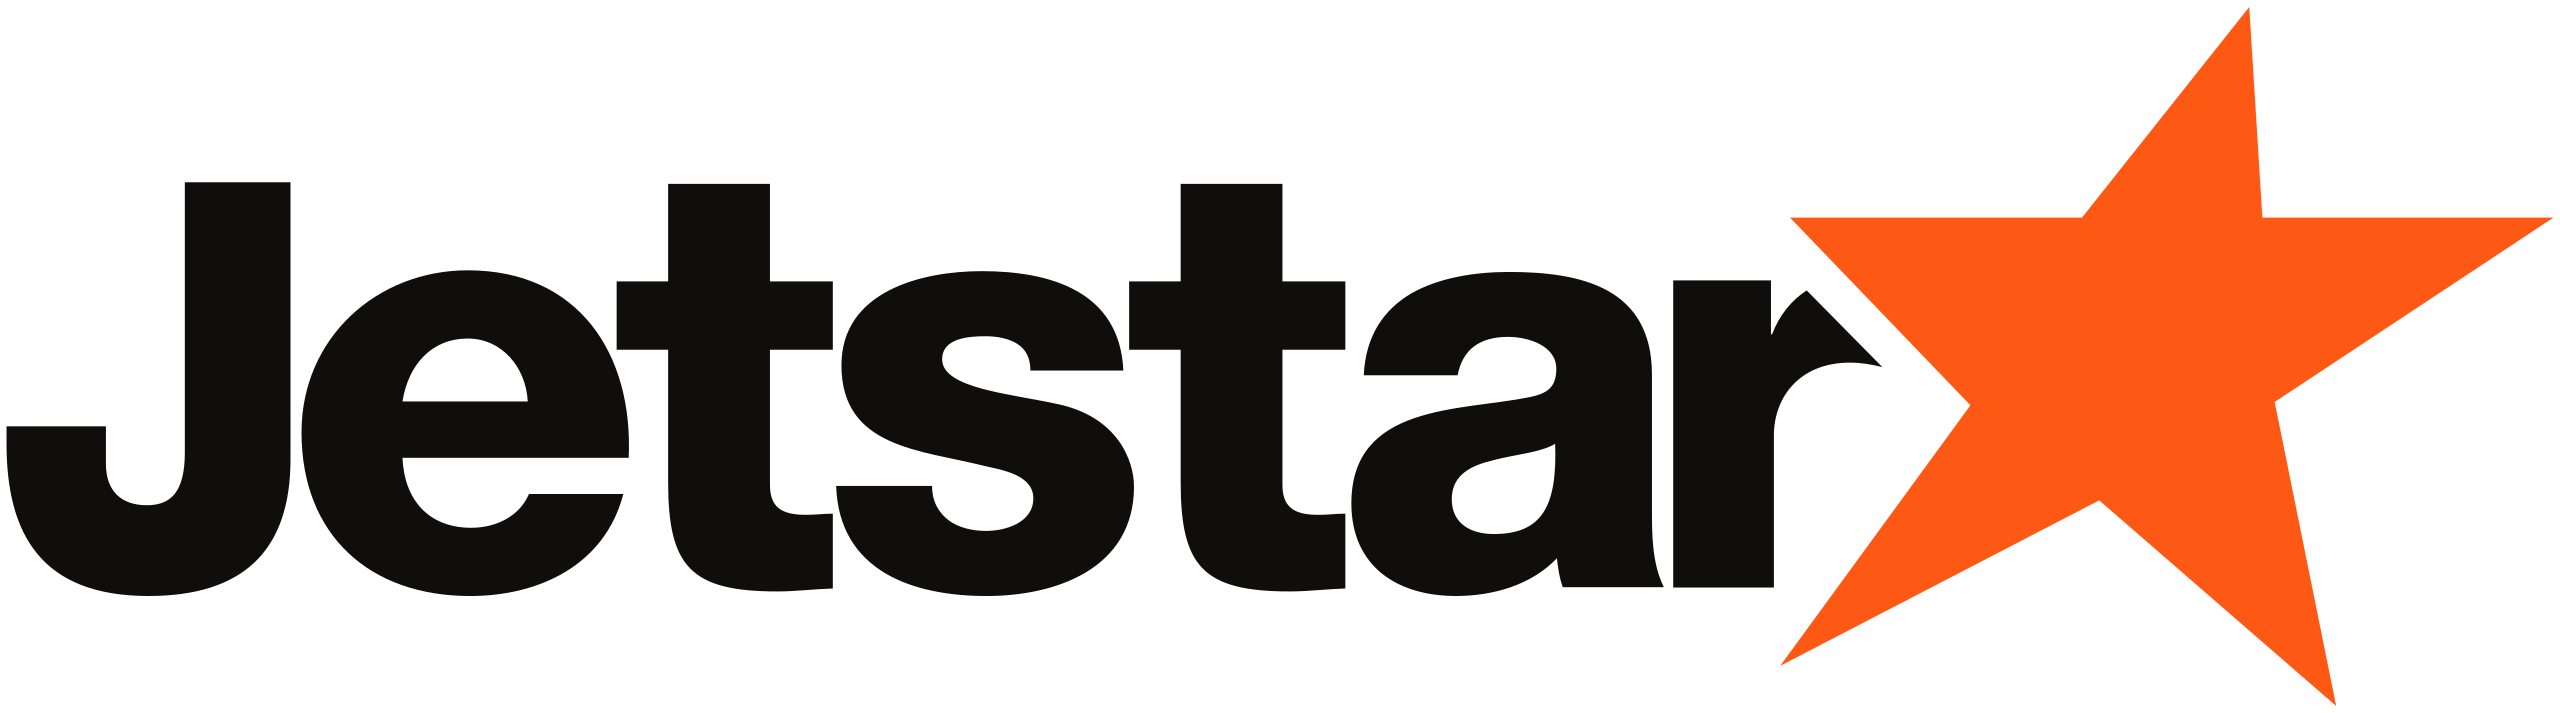 File:Jetstar logo.svg - Wikipedia